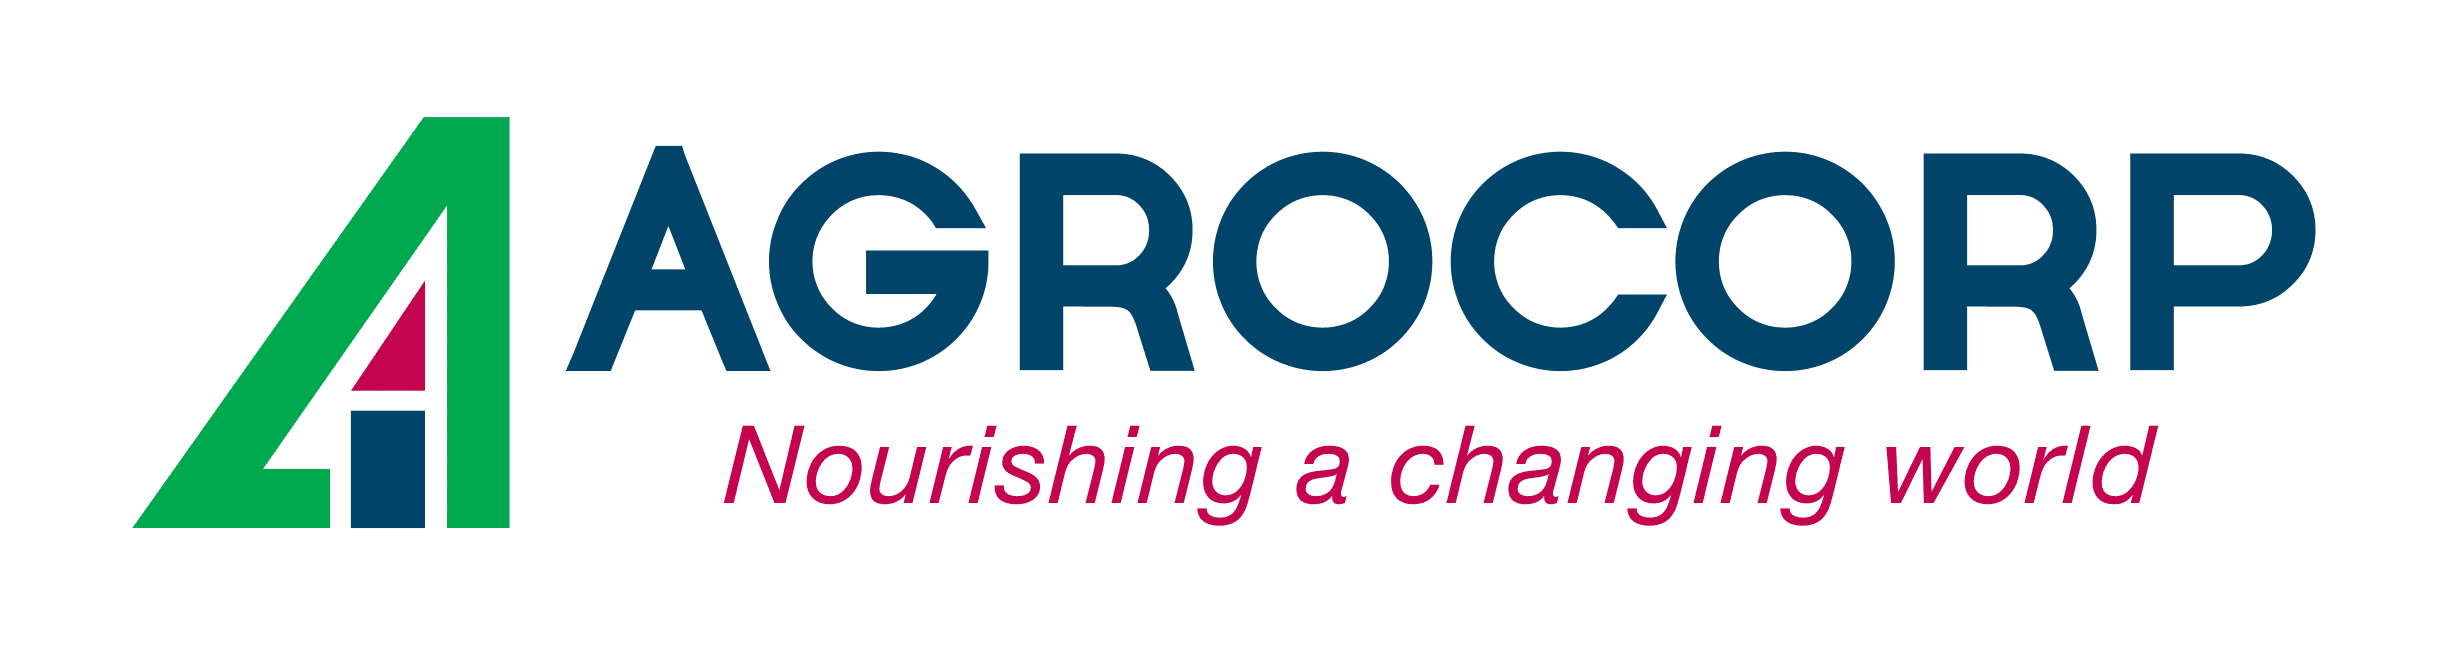 Agrocorp International Pte Ltd header cover image